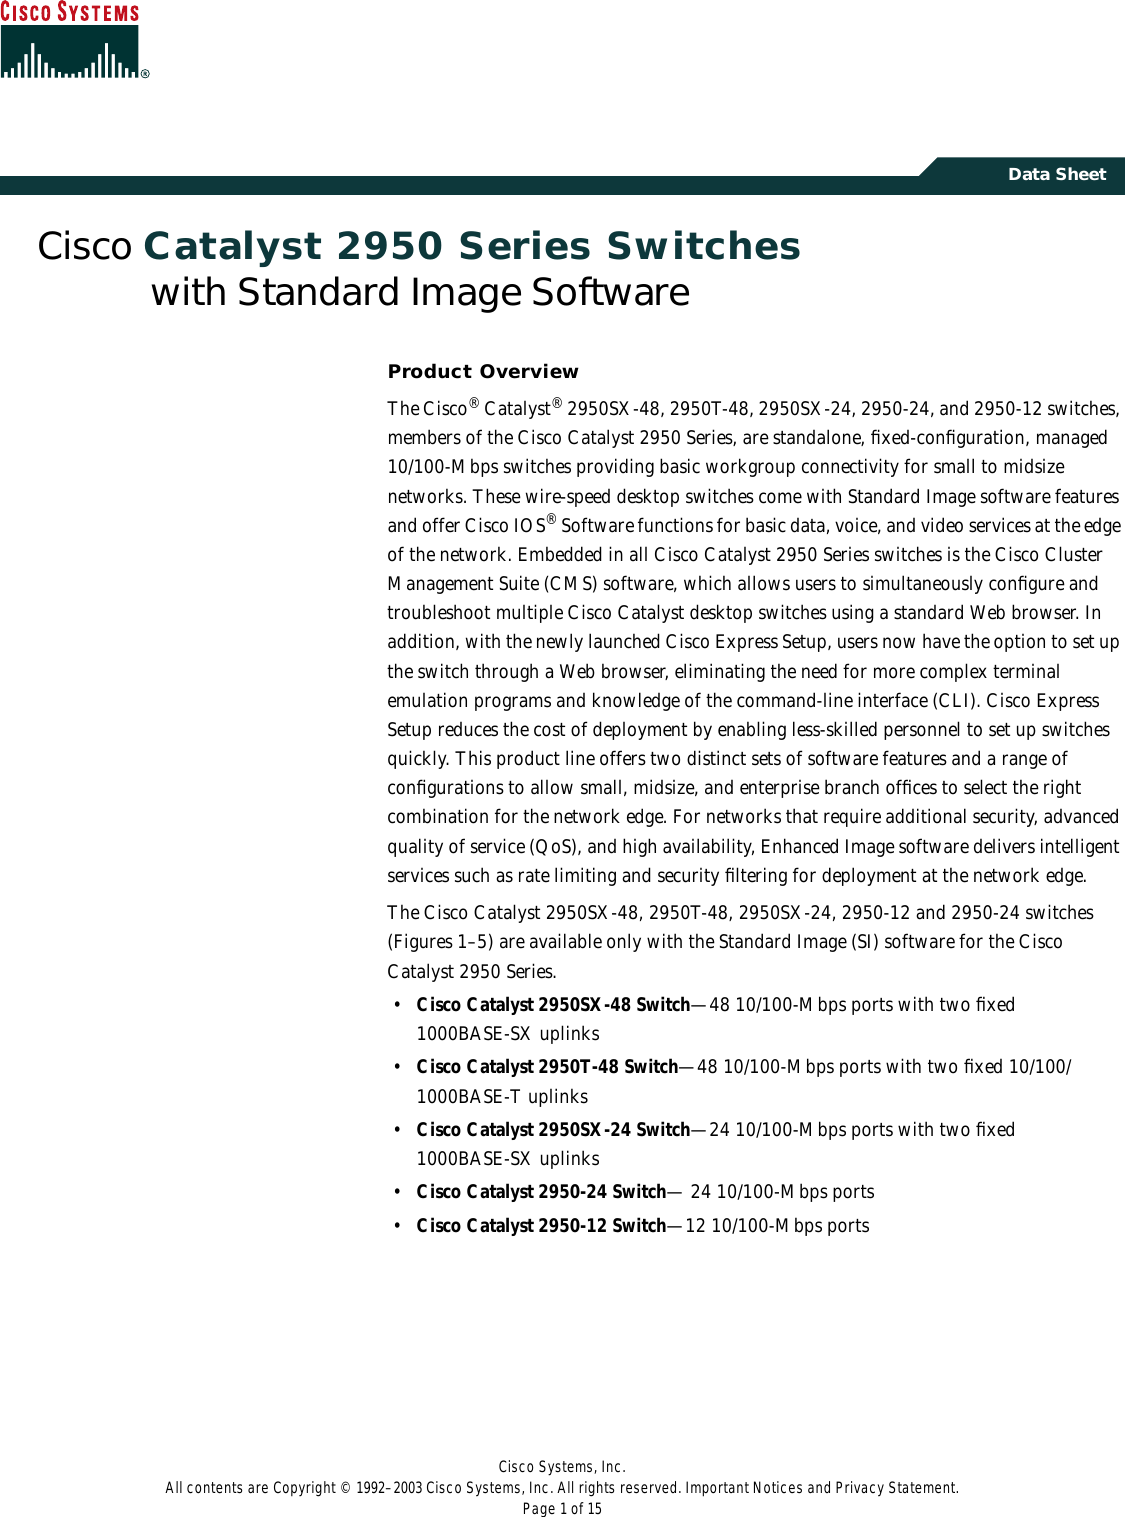 cisco 2950 switch configuration guide